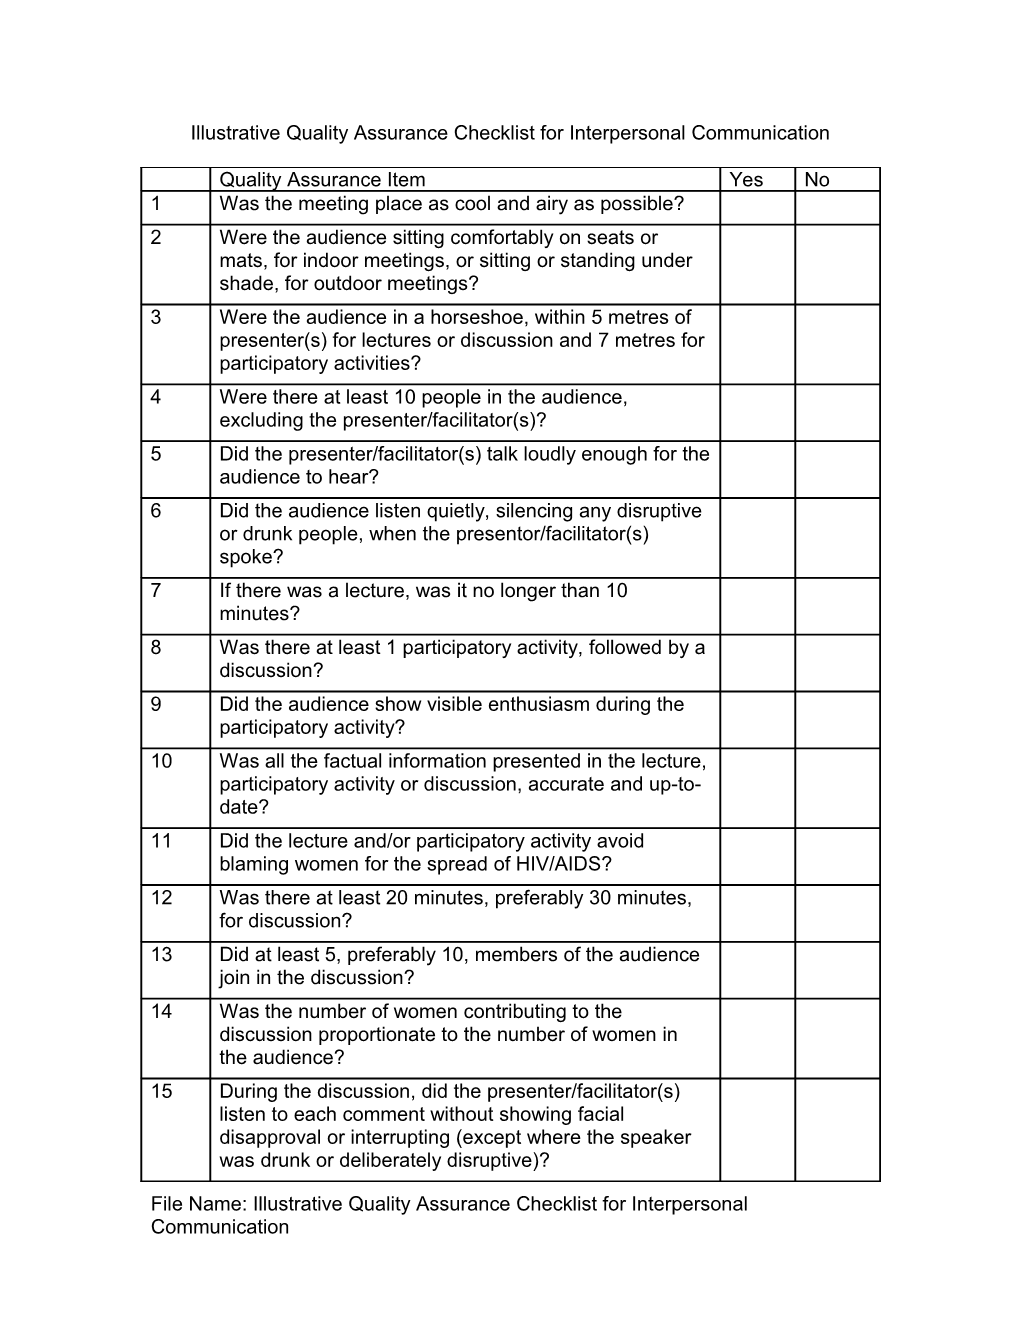 Illustrative Quality Assurance Checklist for Interpersonal Communication